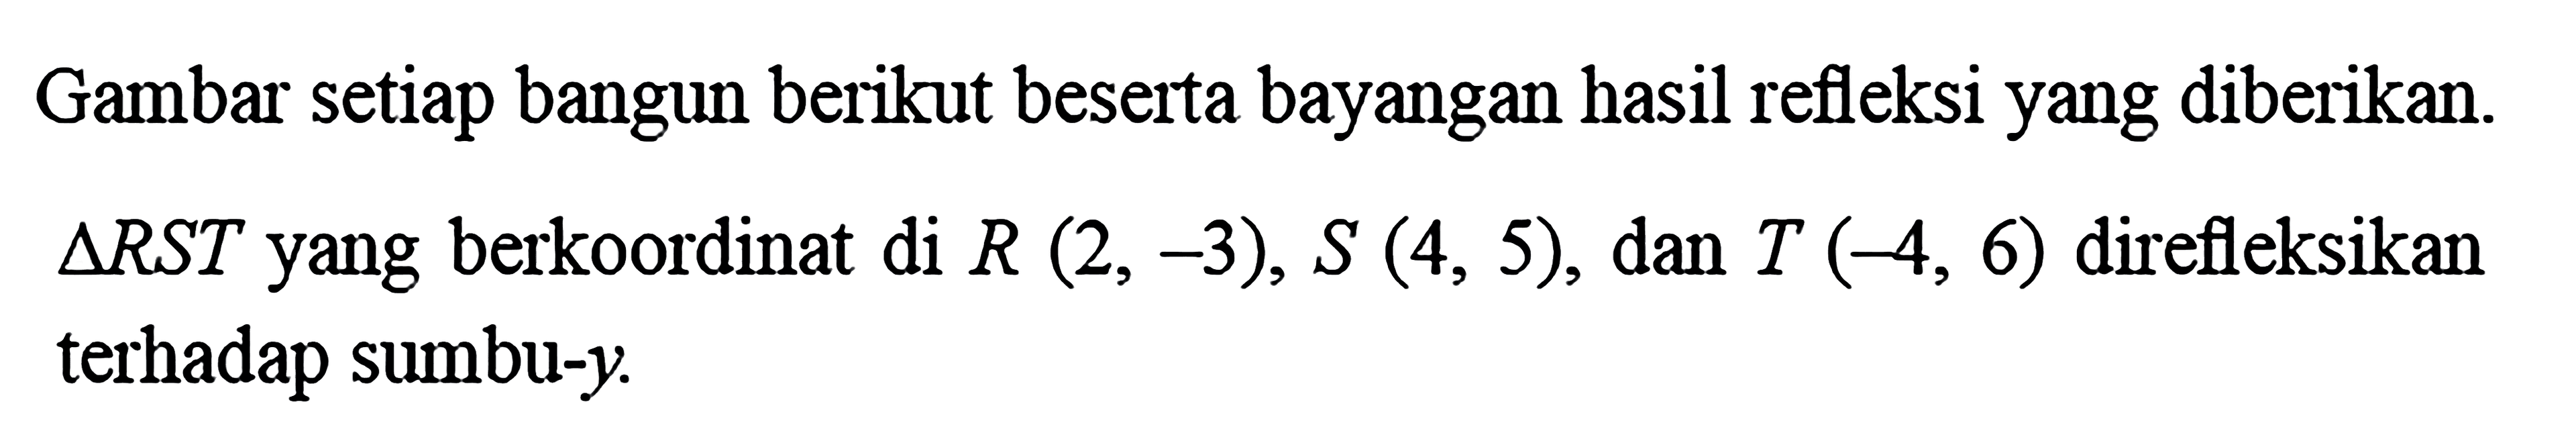 Gambar setiap bangun berikut beserta bayangan hasil refleksi yang diberikan. Segitiga RST yang berkoordinat di R(2, -3), S(4, 5), dan T(-4, 6) direfleksikan terhadap sumbu-y